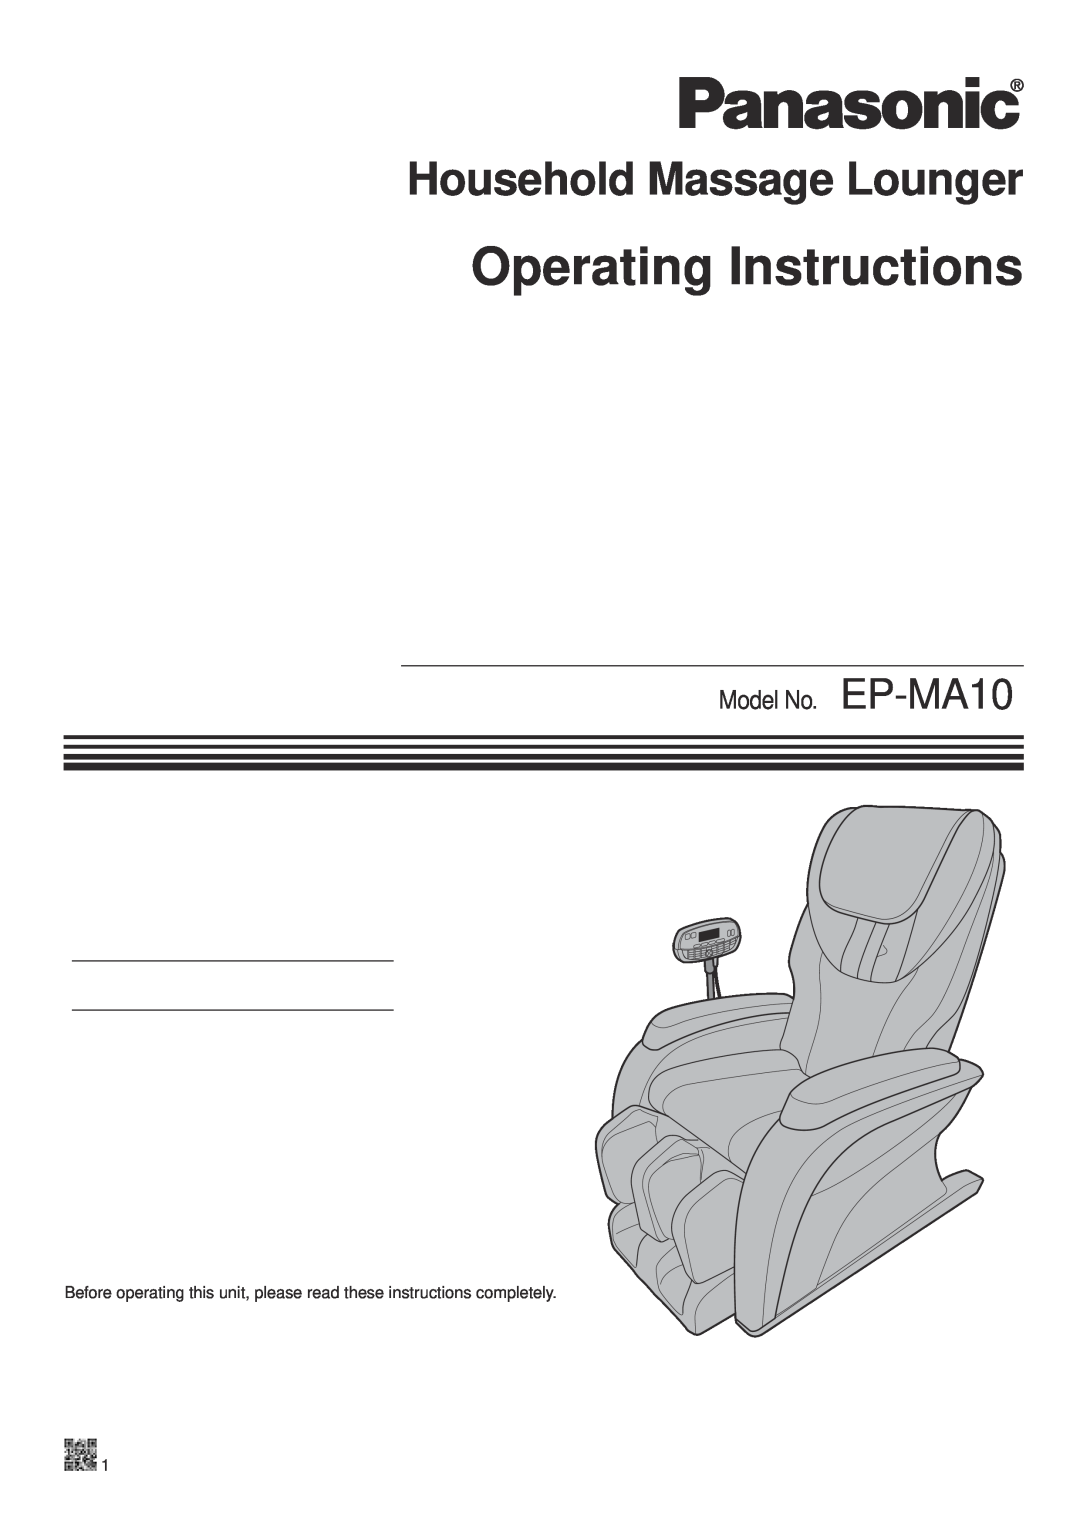 Panasonic manual Operating Instructions, Household Massage Lounger, Model No. EP-MA10 